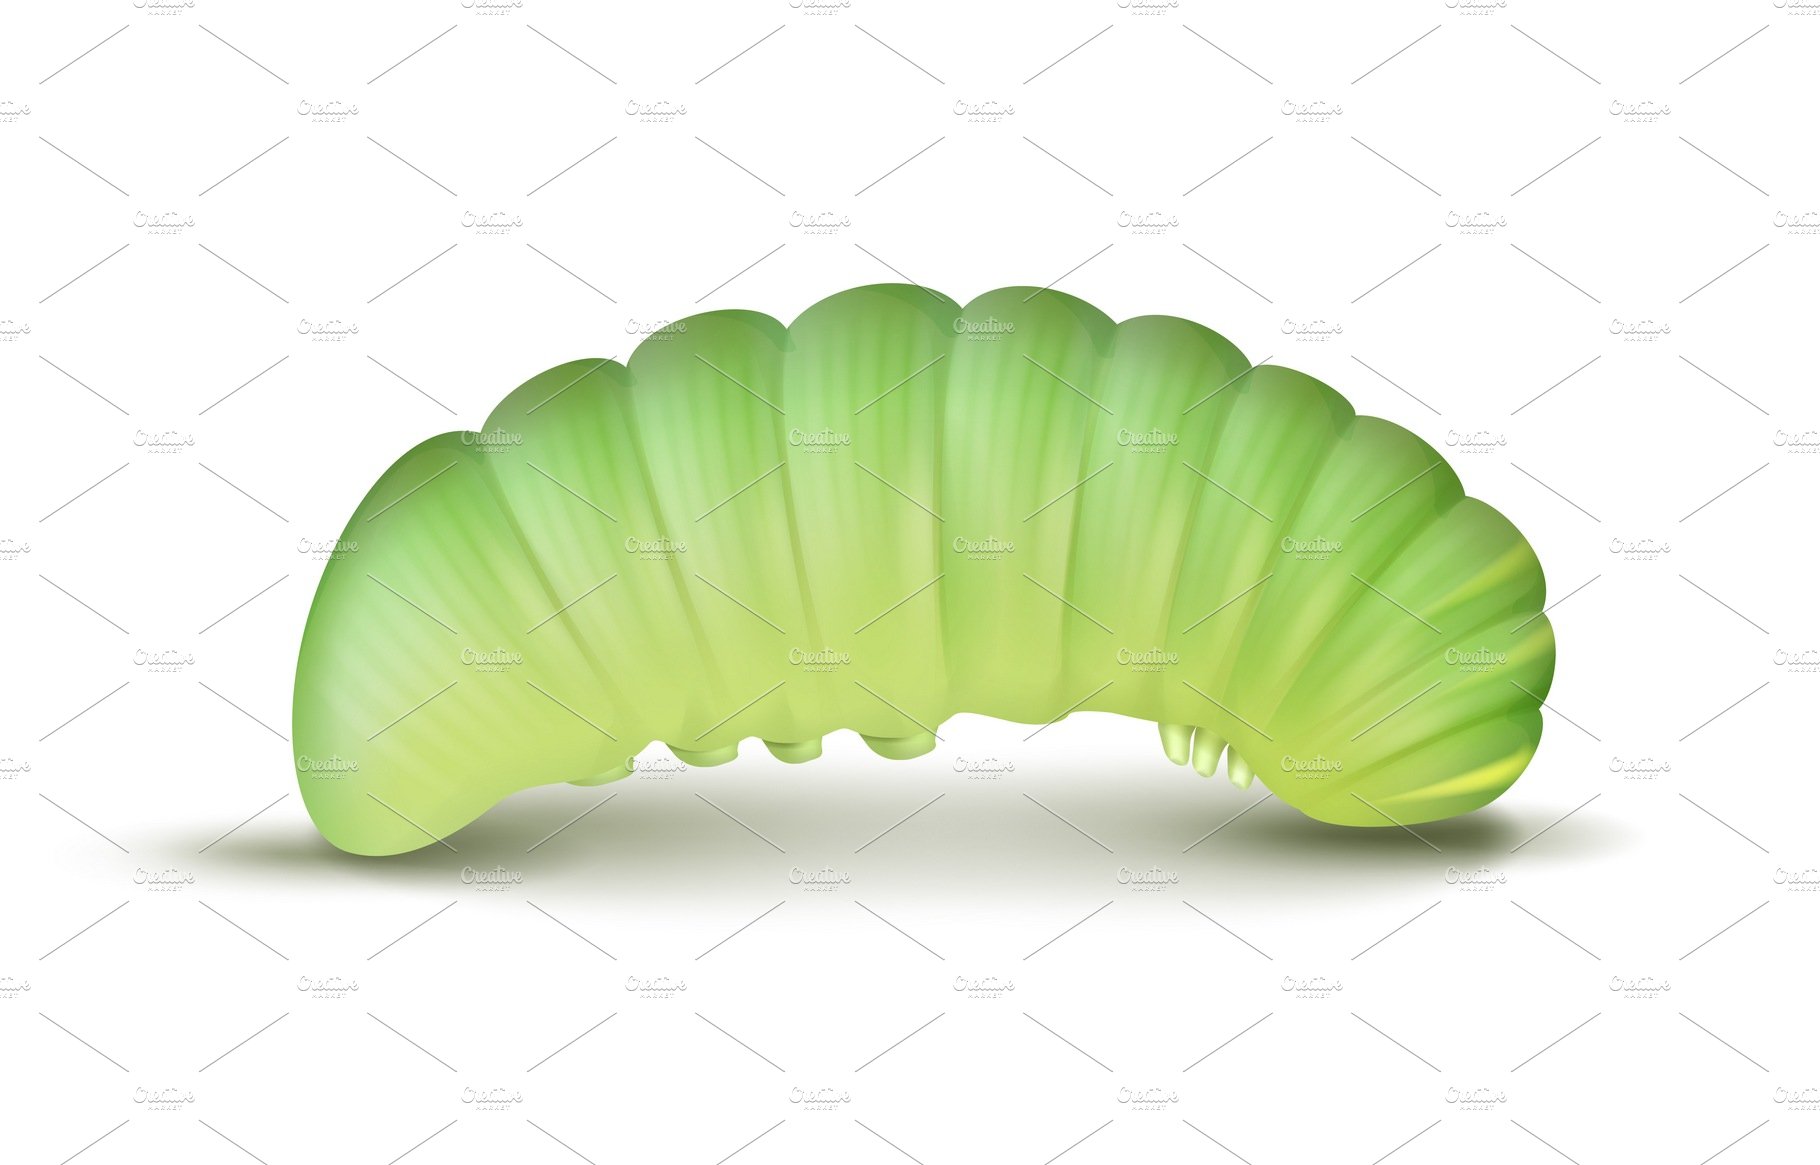 Light green caterpillar cover image.